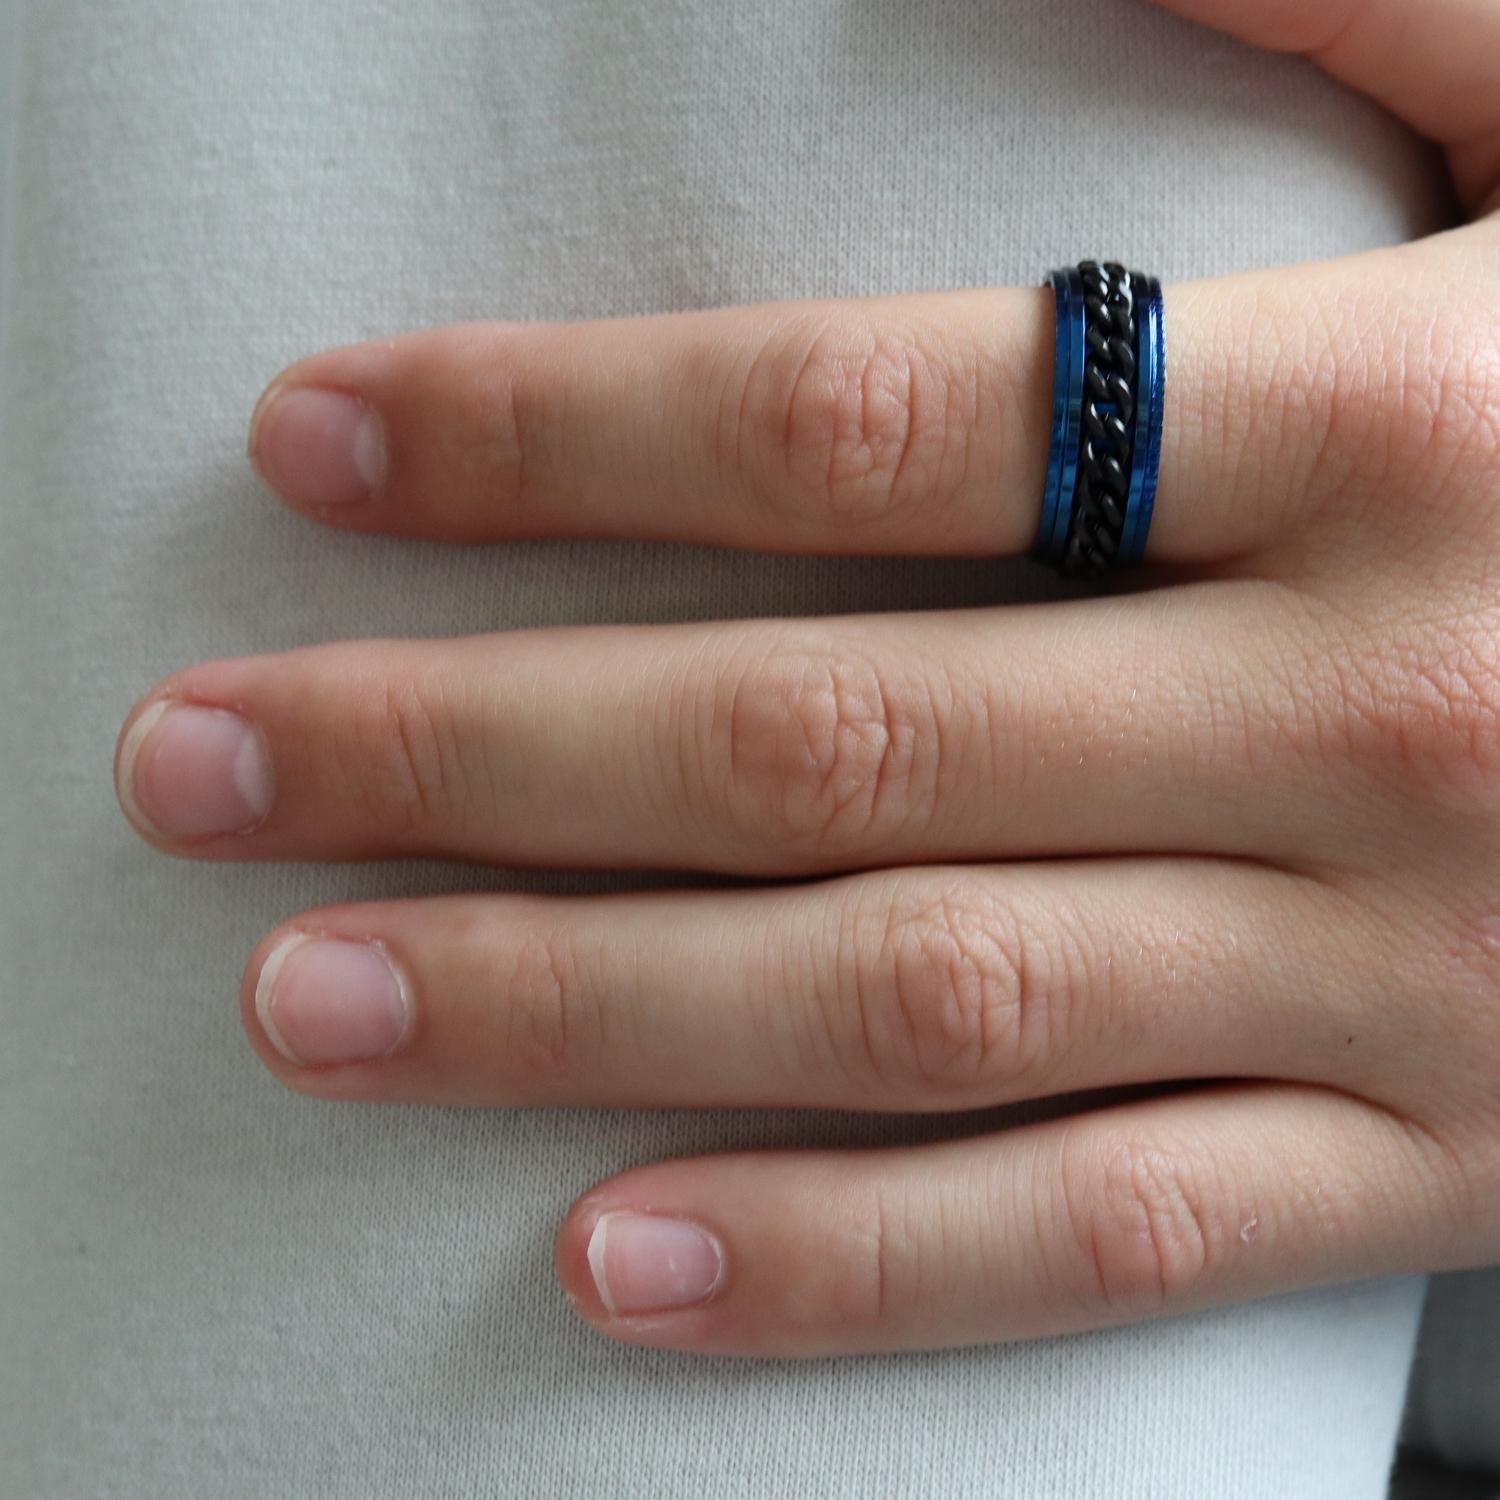 Anxiety Ring (ketting) Blauw-Zwart om vinger